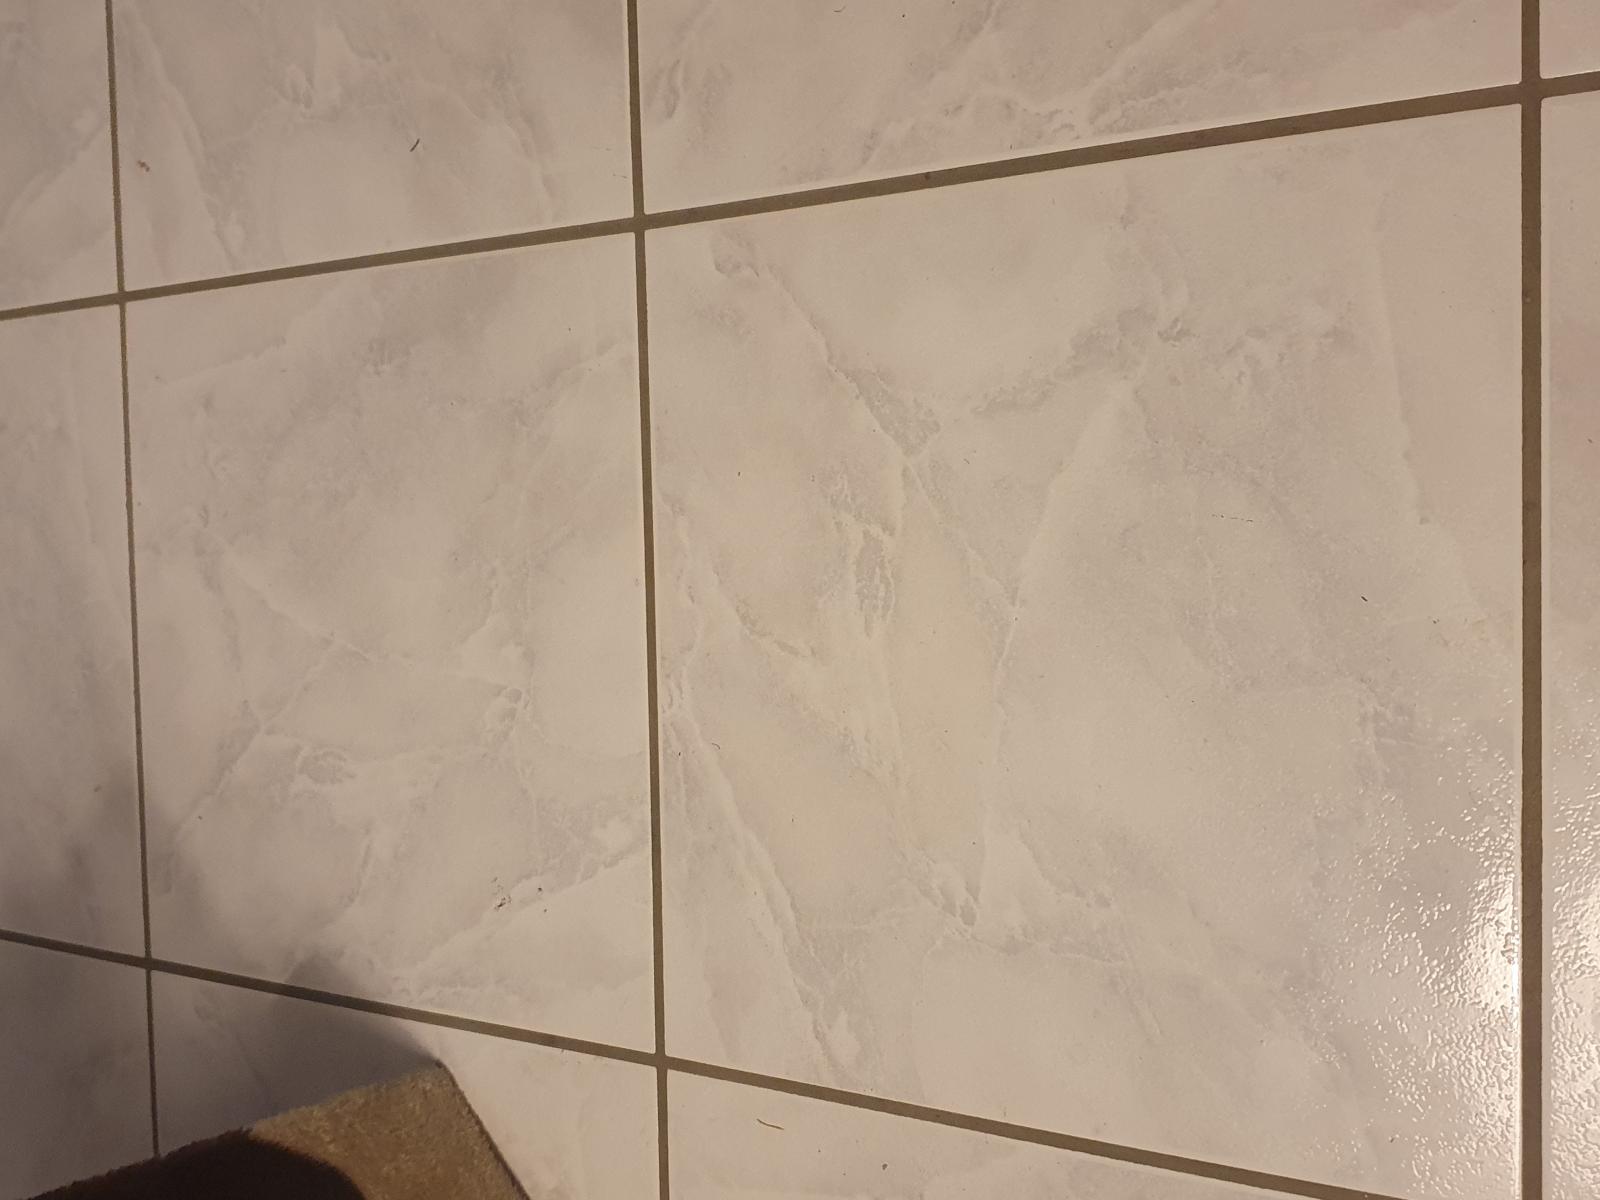 Finding some older floor tiles